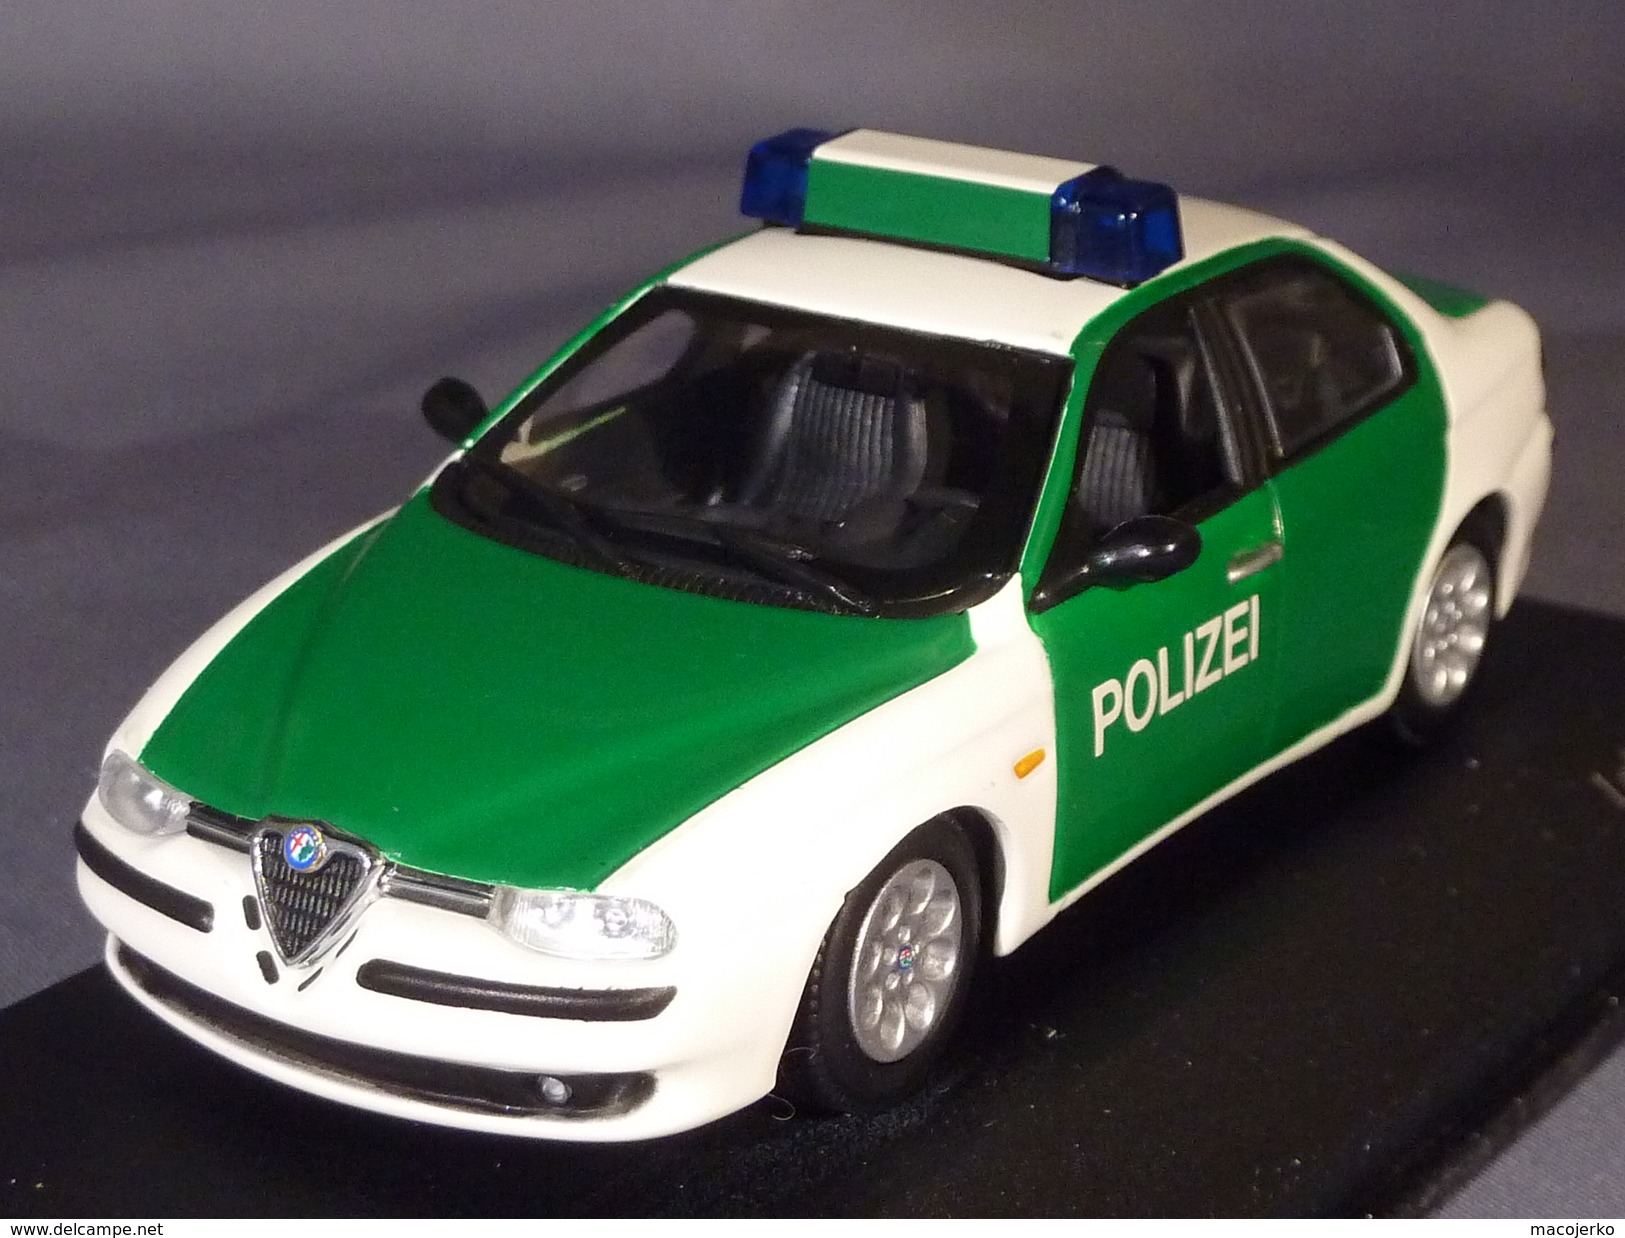 Minichamps 430120790, Alfa Romeo 156 Polizei 1997 - Minichamps